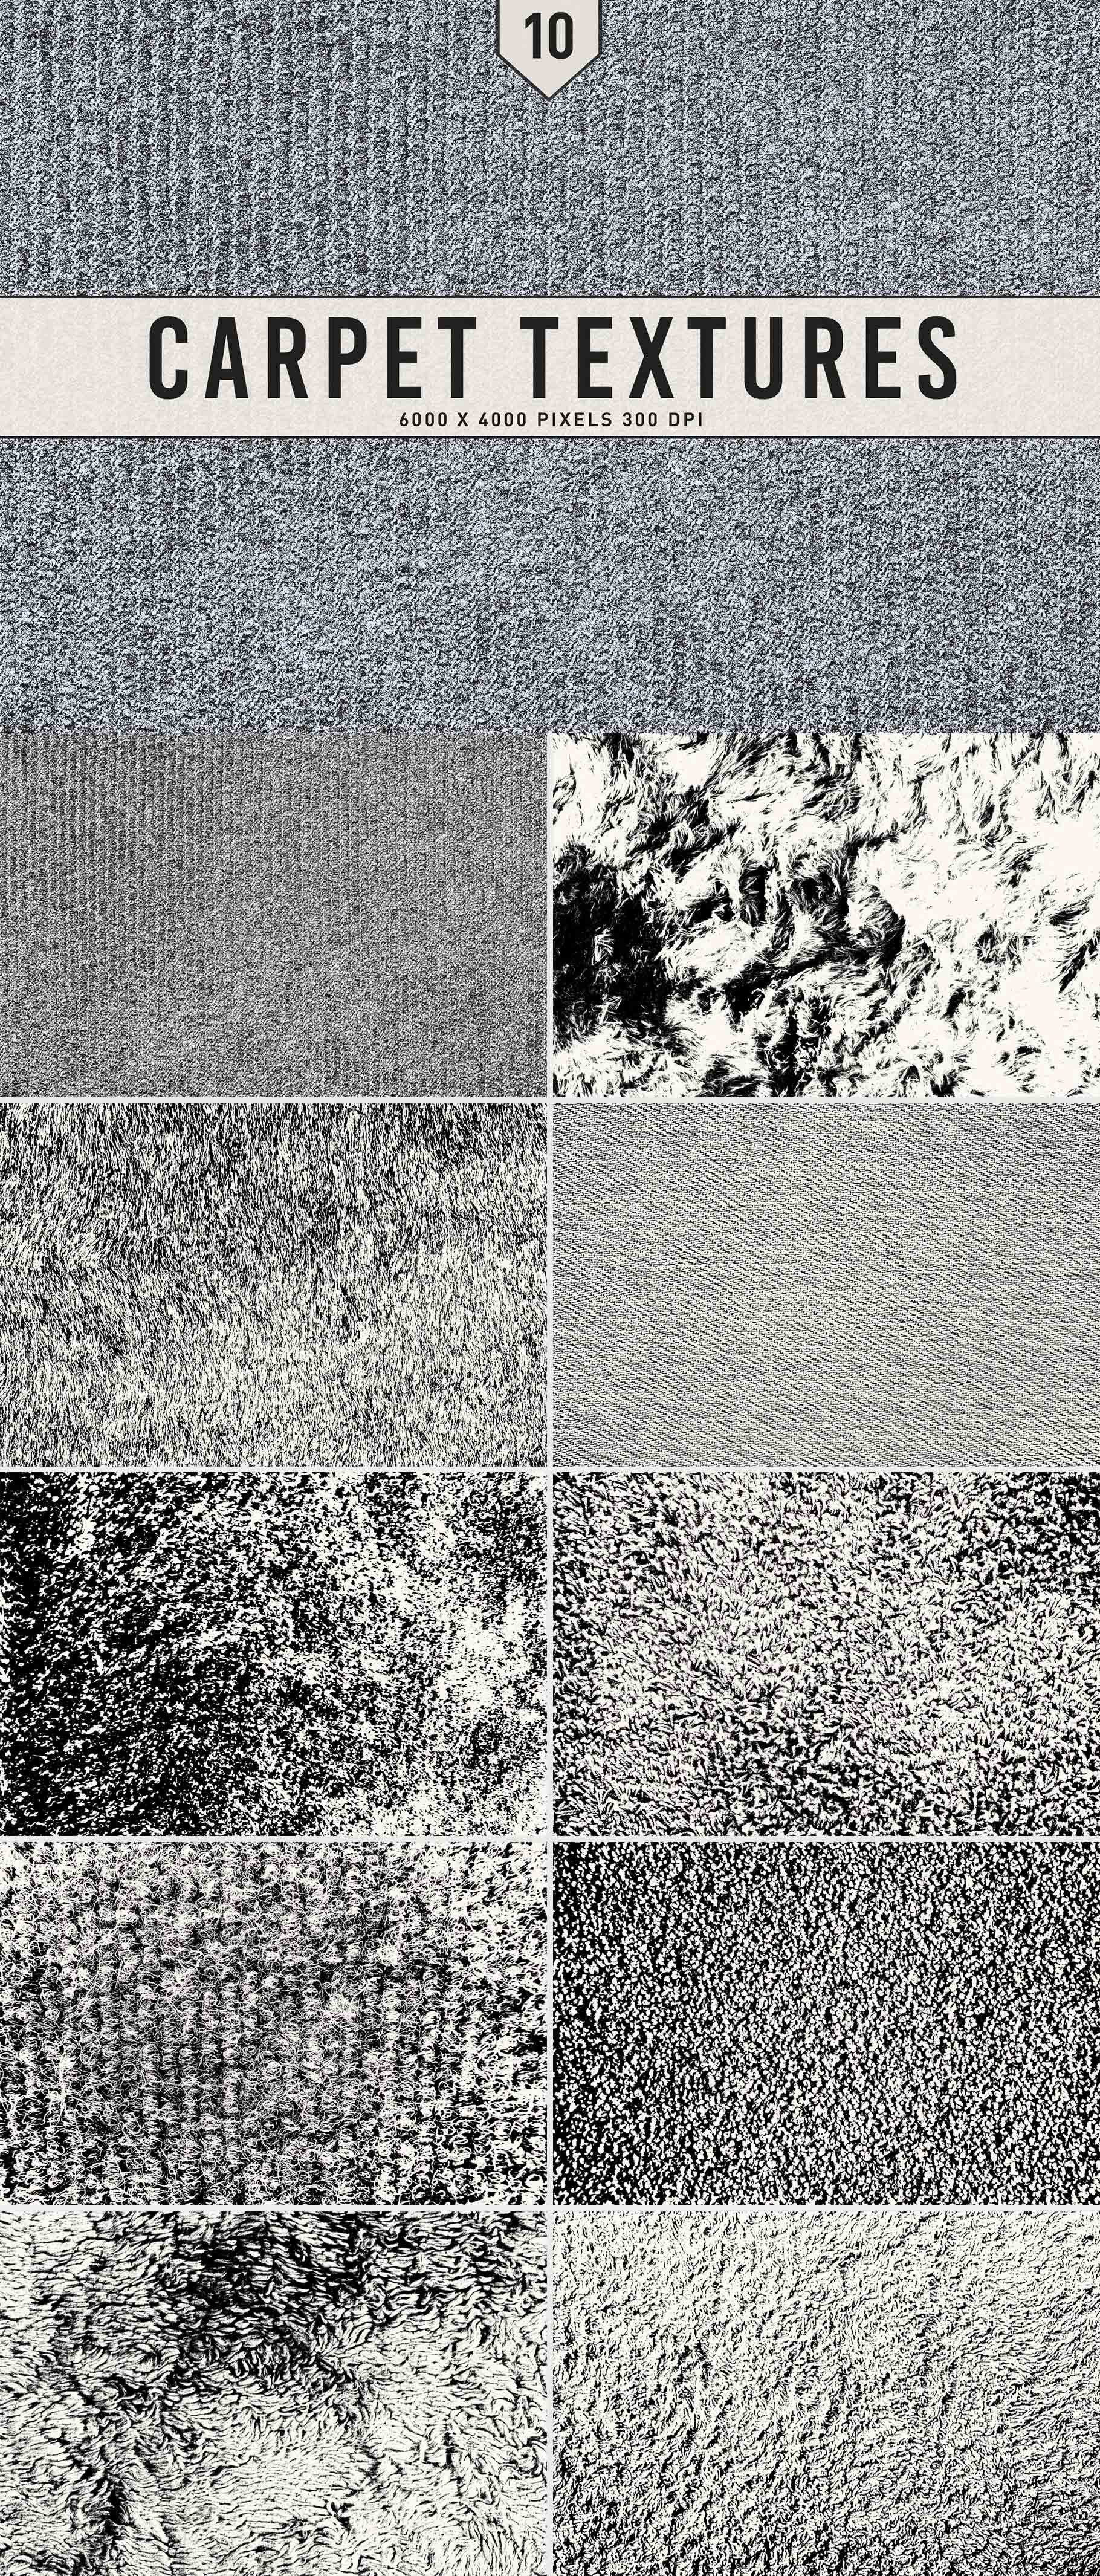 Carpet Textures cover image.